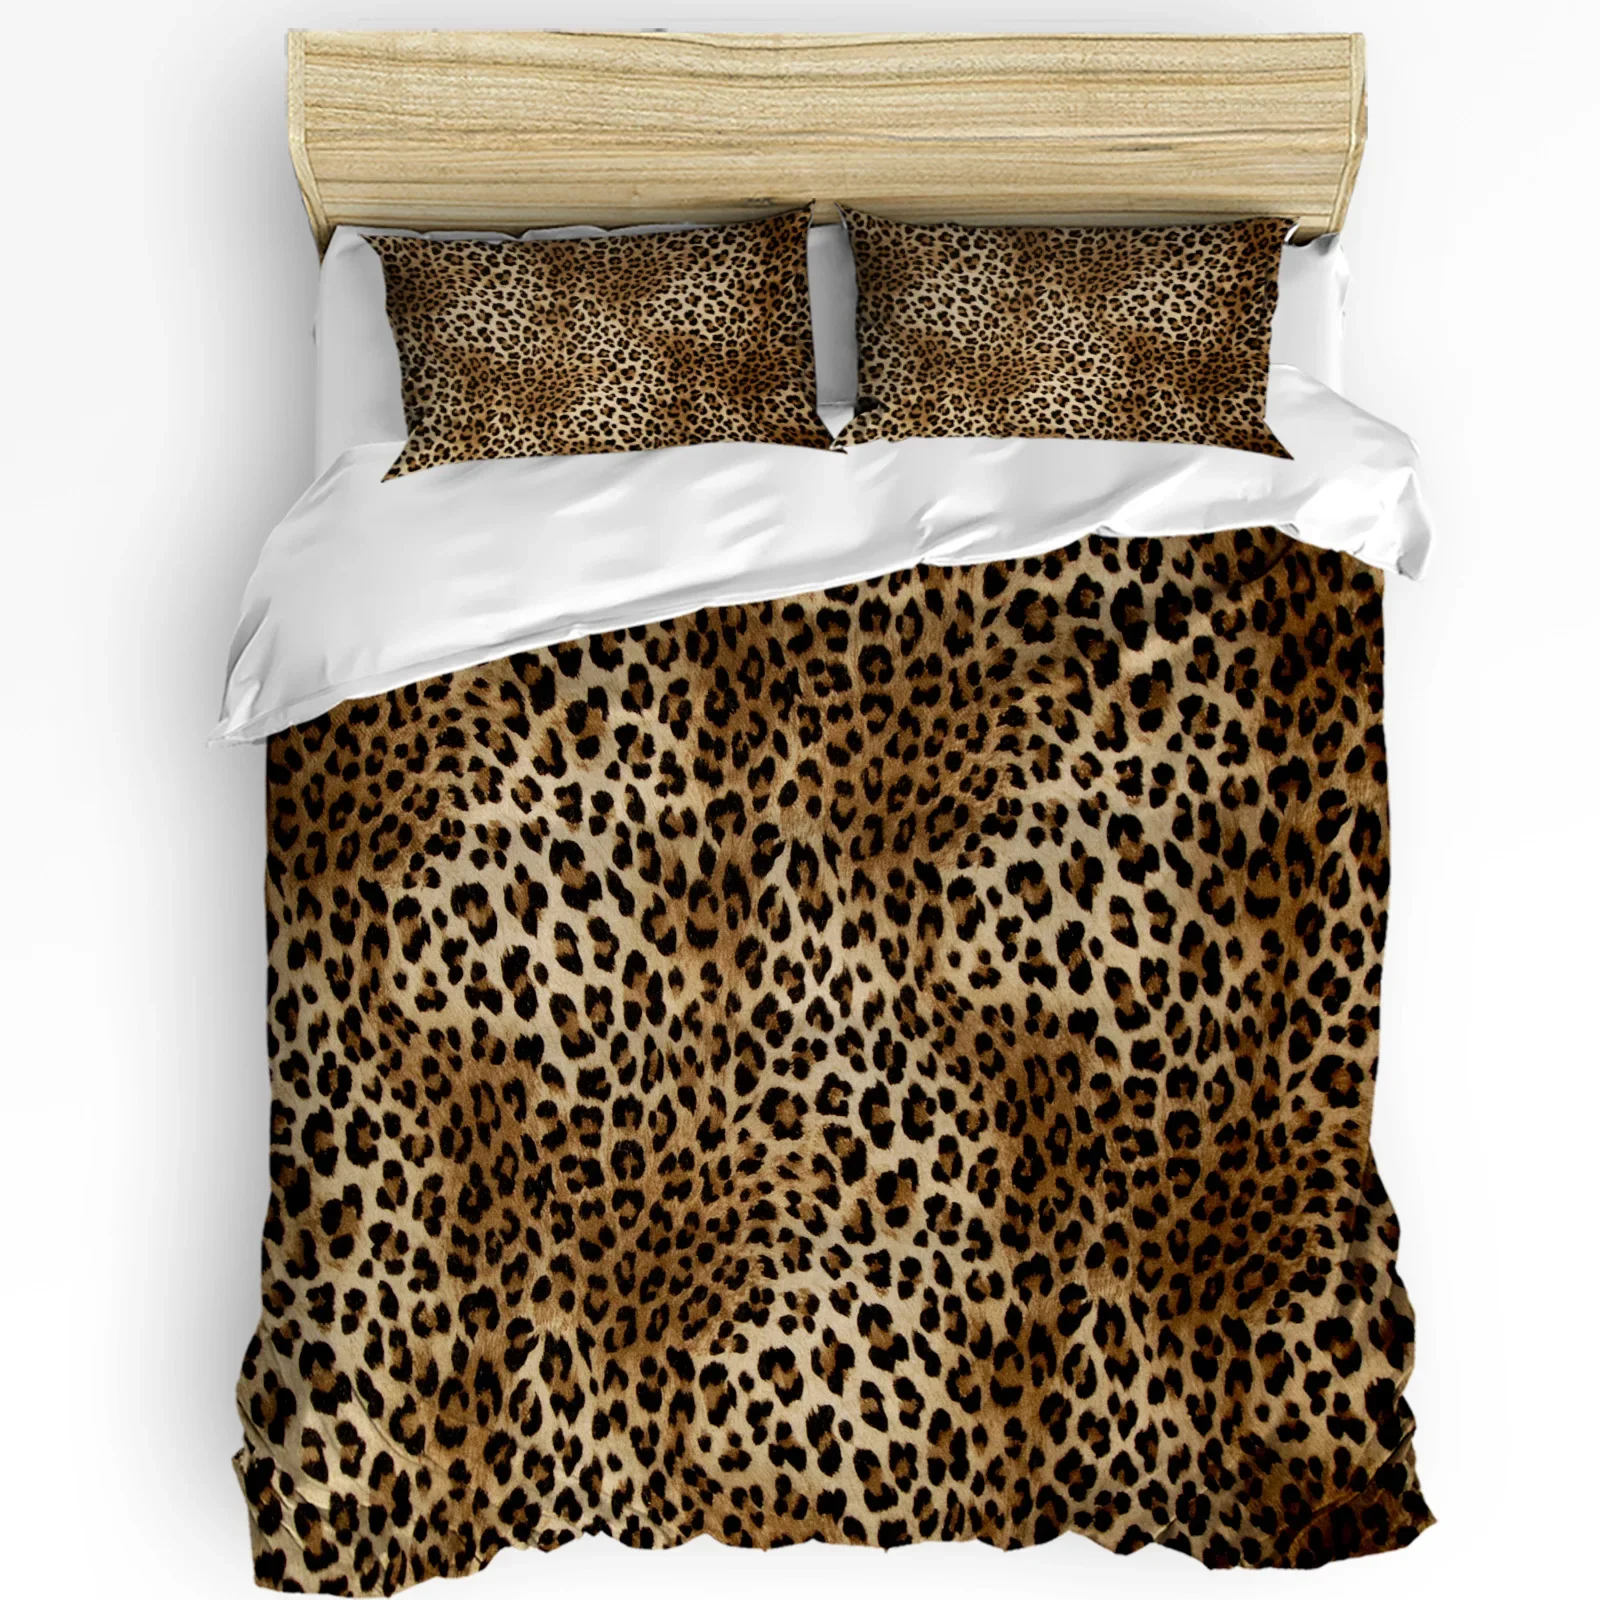 leopard-print-printed-comfort-duvet-cover-pillow-case-home-textile-quilt-cover-boy-kid-teen-girl-luxury-3pcs-bedding-set